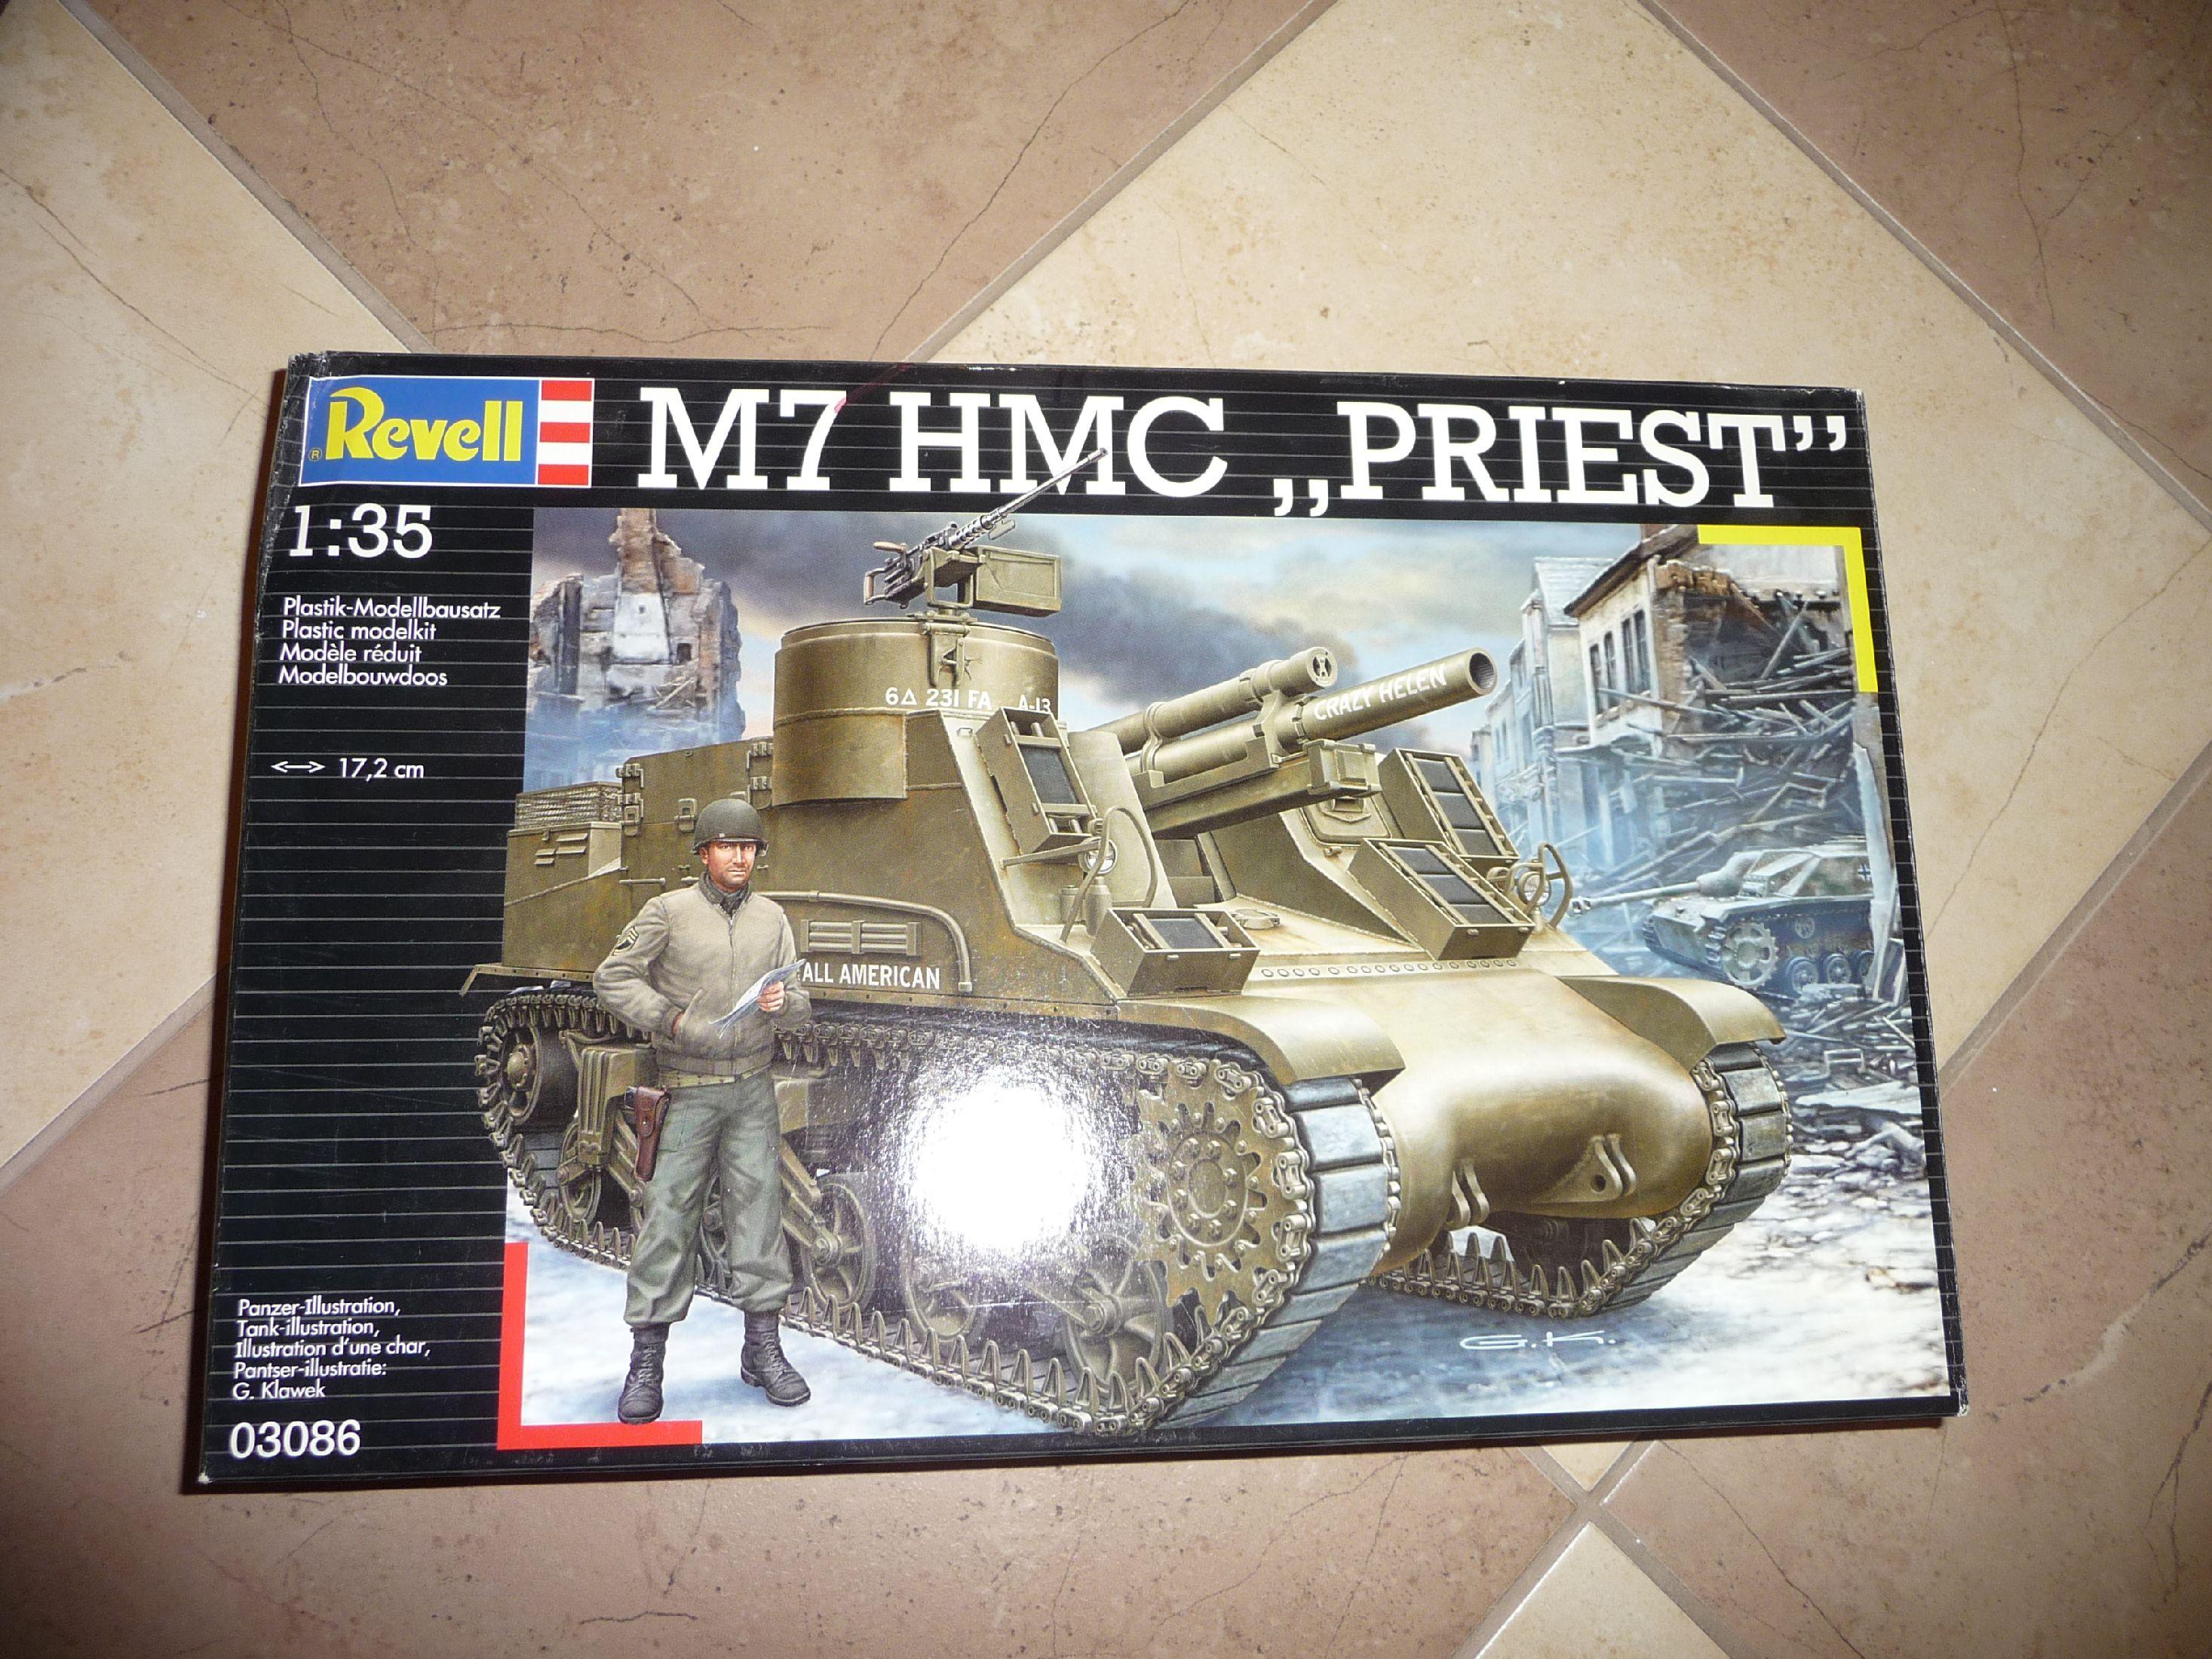 M7

Revell M7 HMC Priest 6500